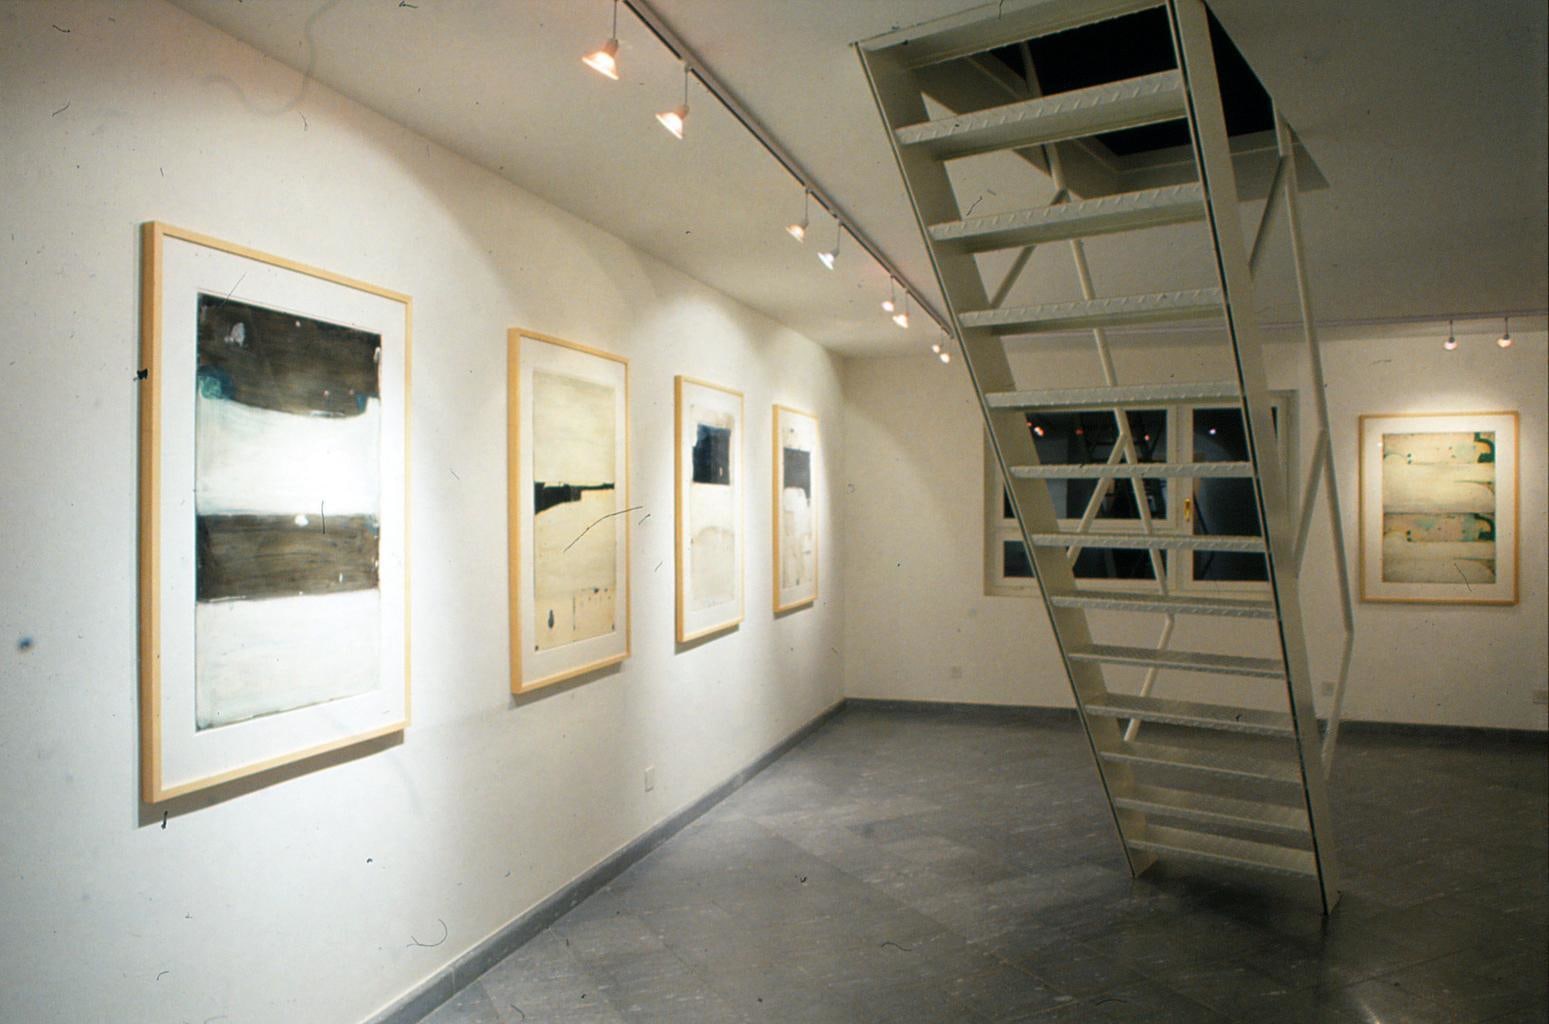  Installation View, John Millei: Drawings, Marc Jancou, Zurich, 1991